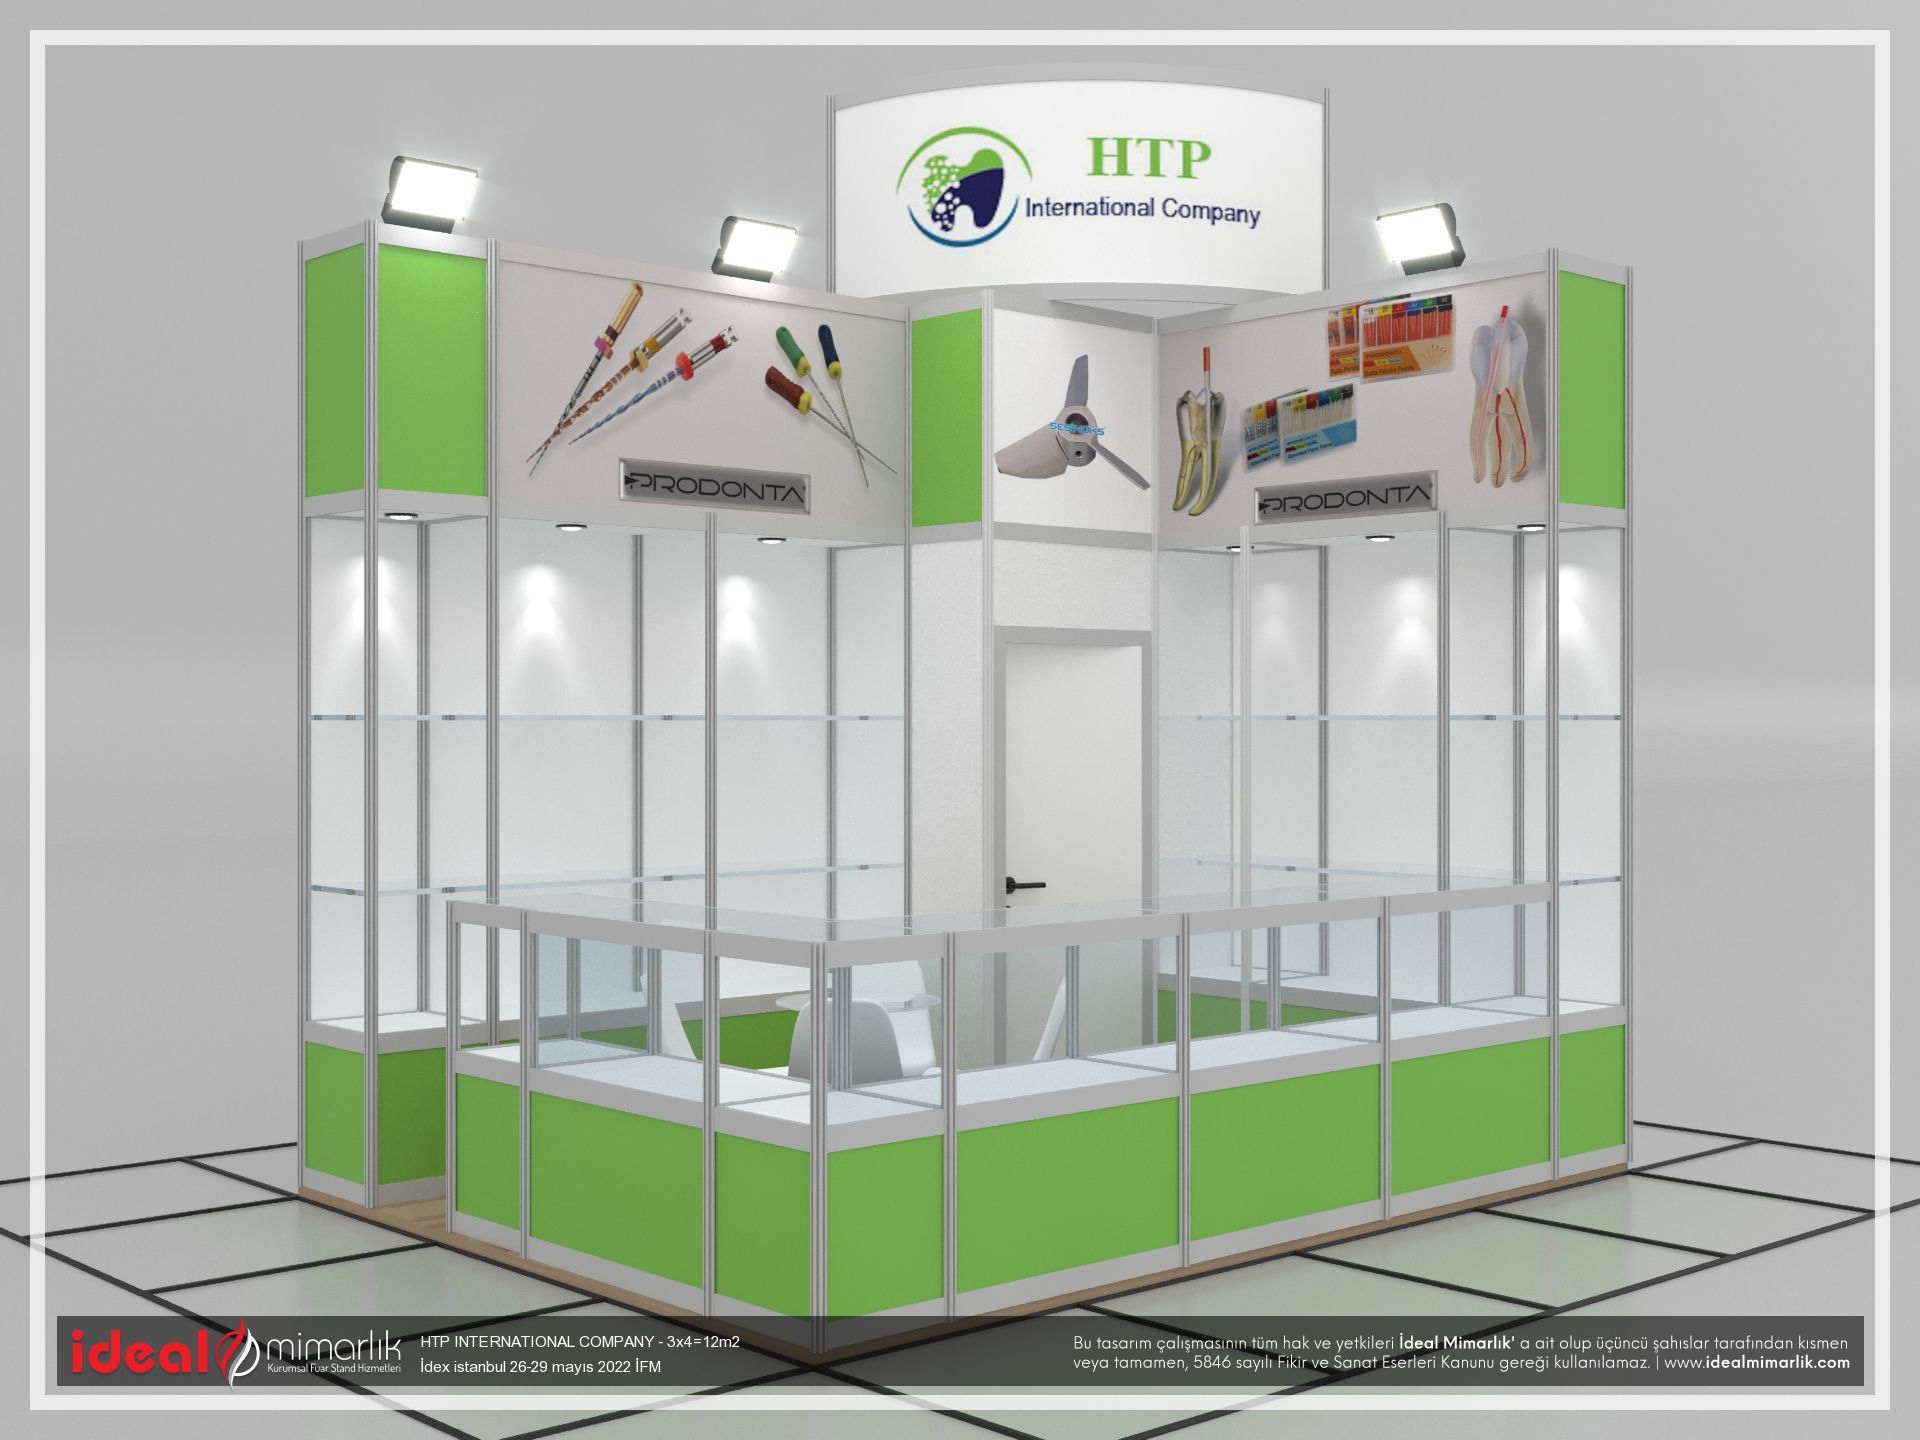 HTP INTERNATIONAL COMPANY |İdex istanbul 26-29 mayıs 2022 İFM